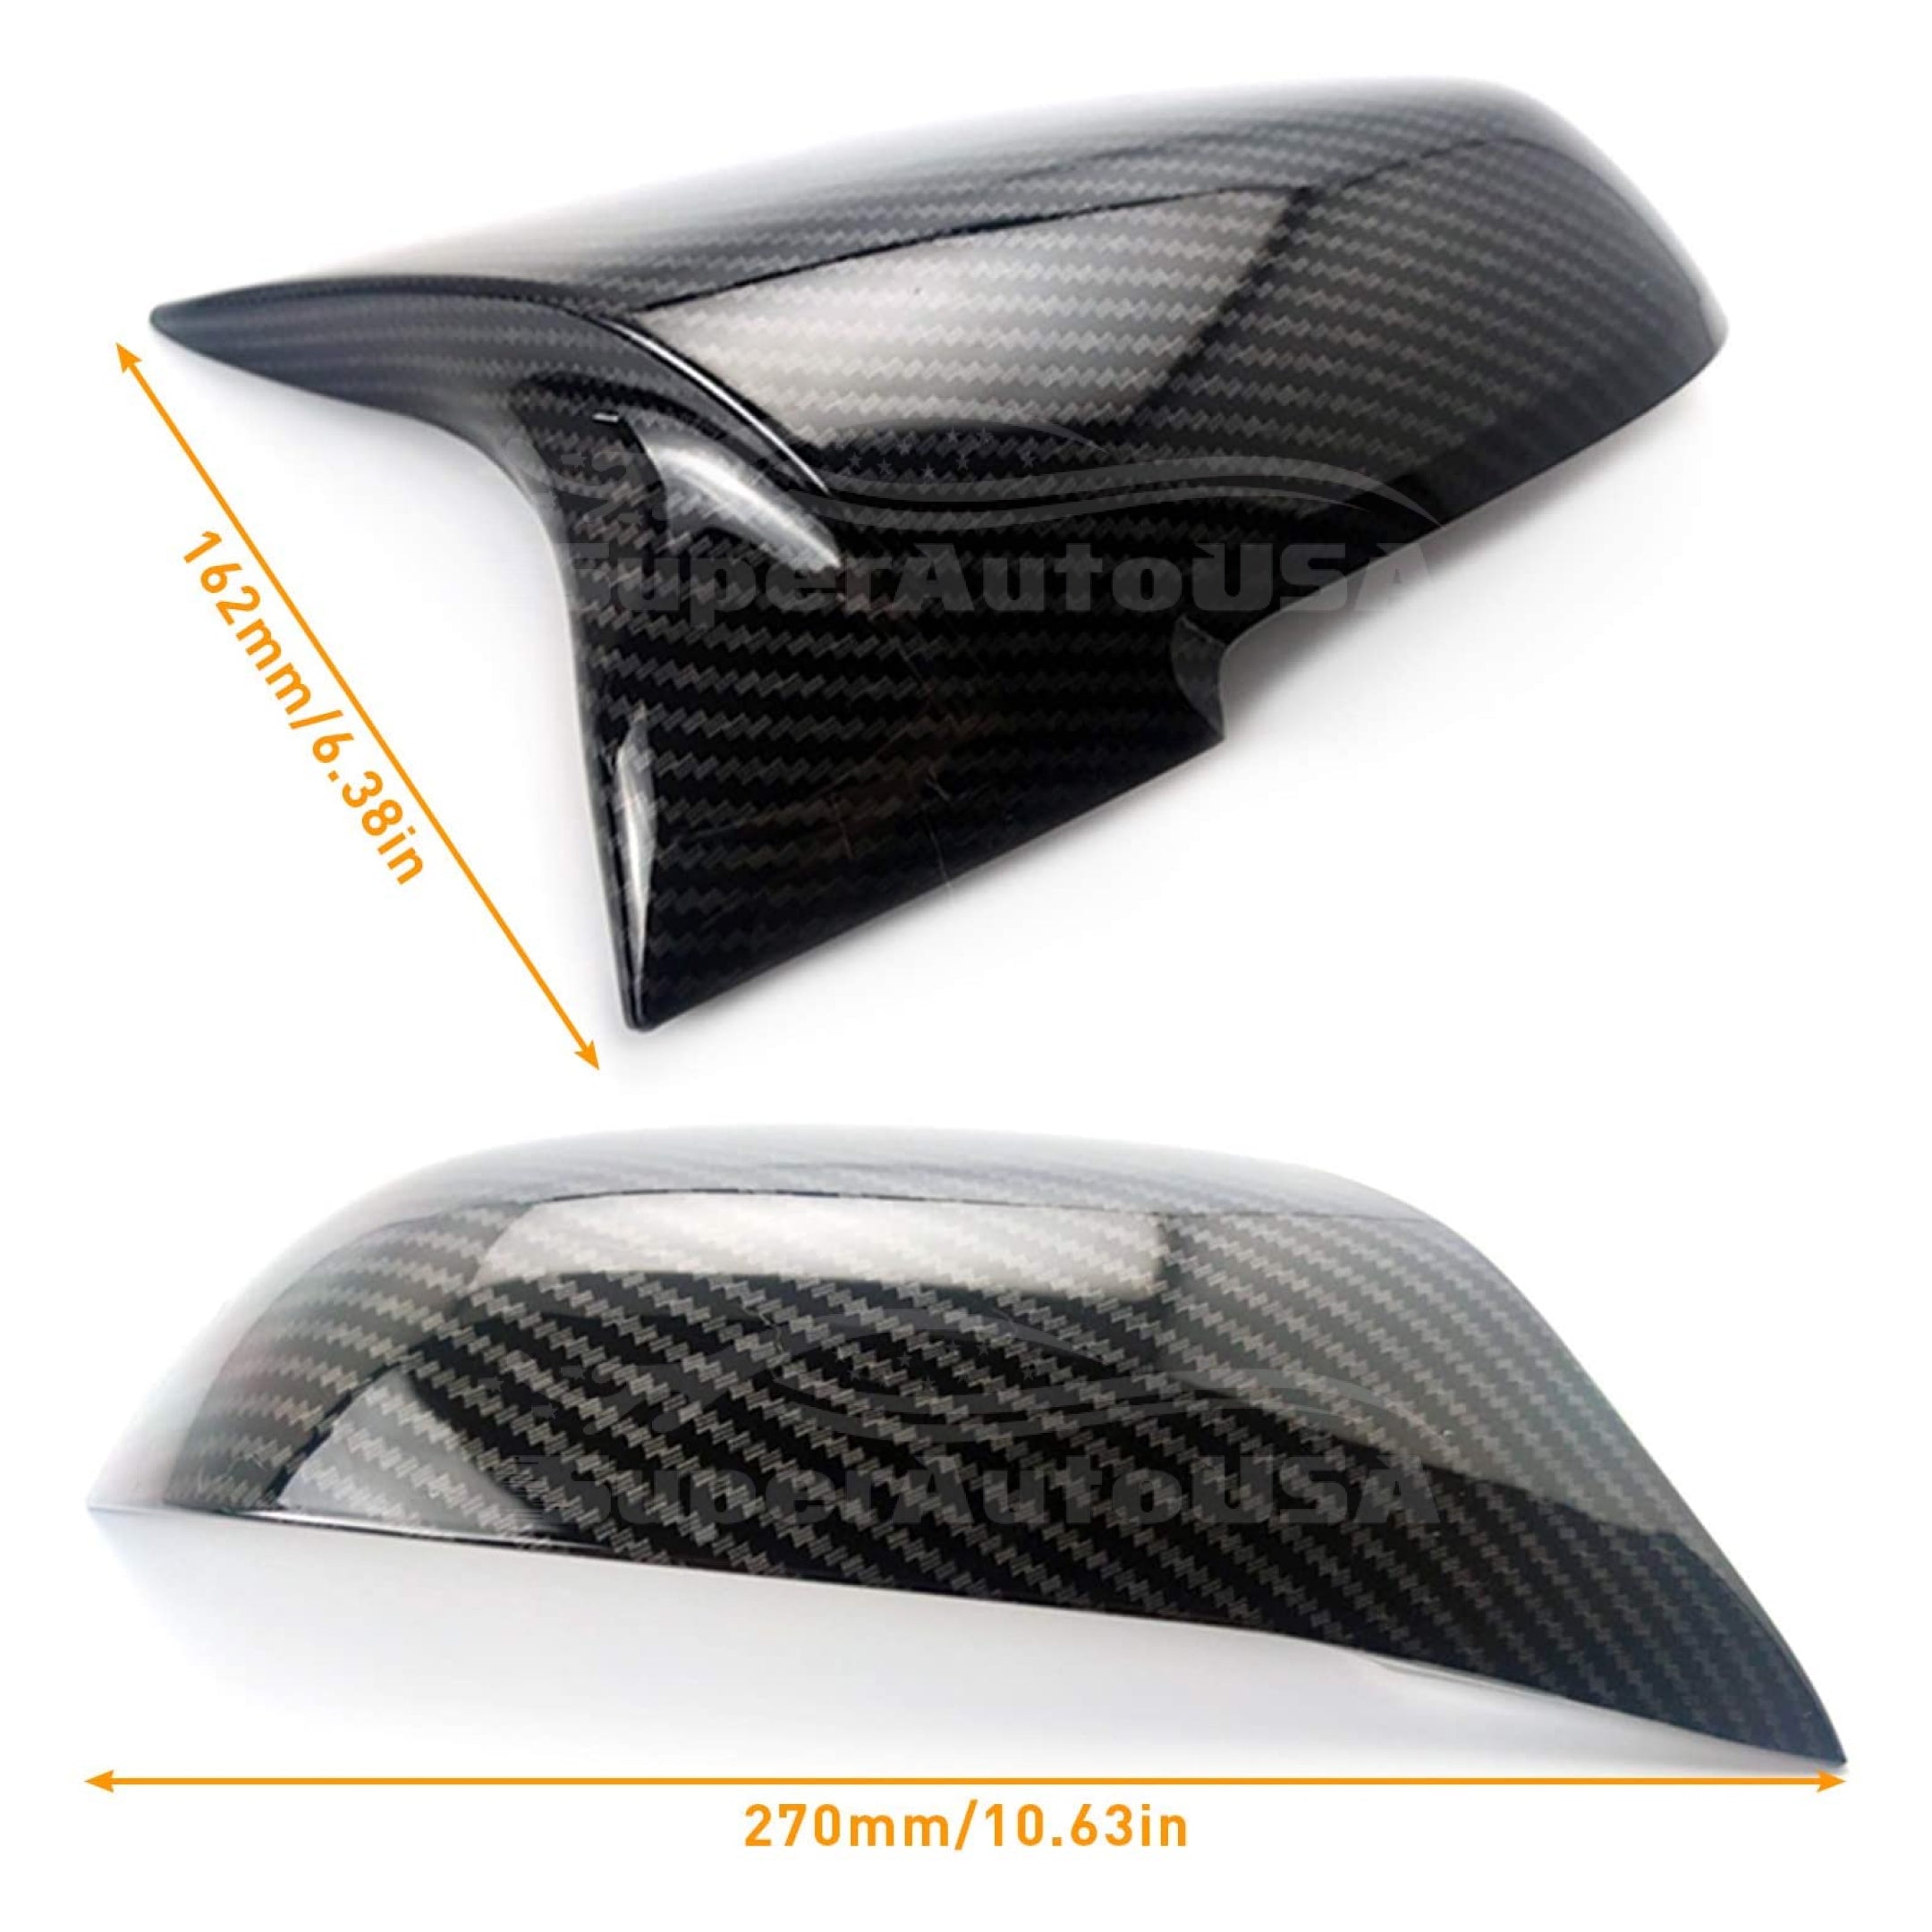 Se adapta a BMW 5 Series F10 F15 M5, tapas de espejo retrovisor lateral estilo bocina (impresión de fibra de carbono)